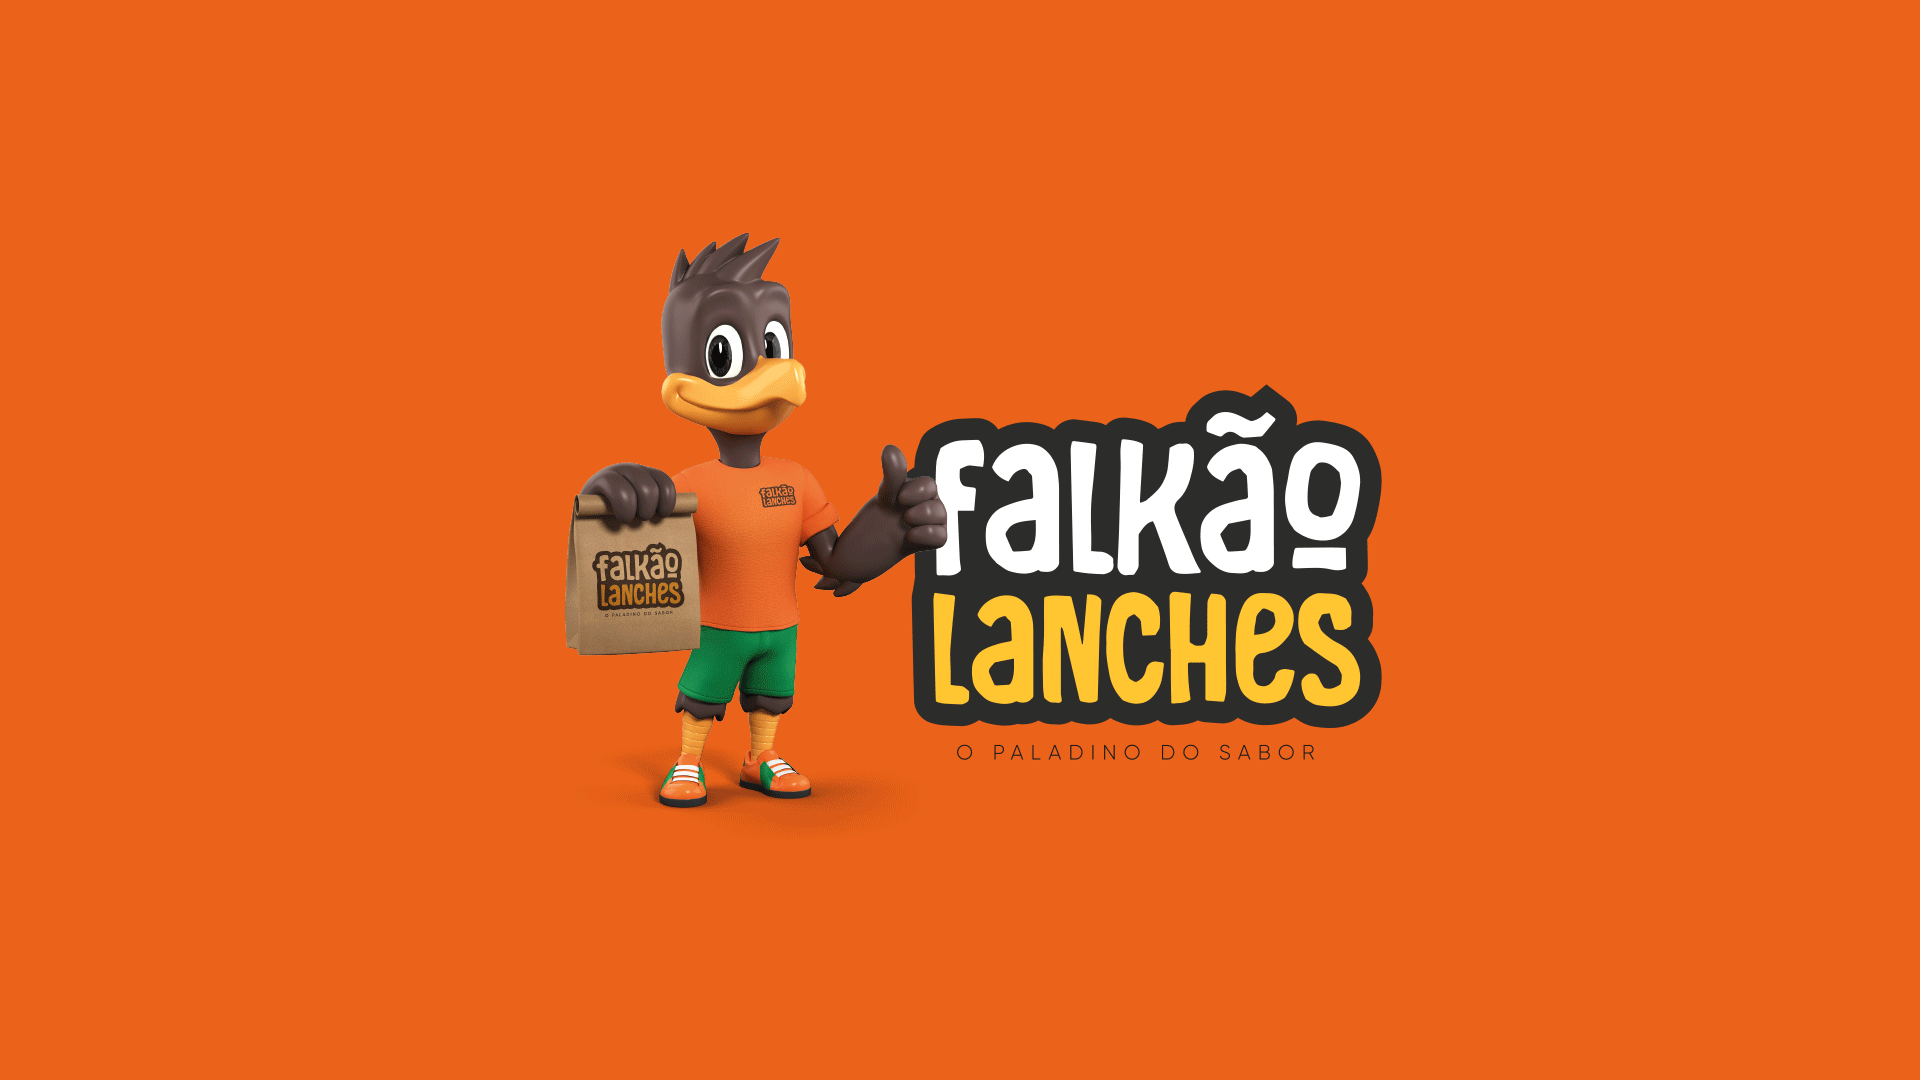 Galeria Falkão Lanches – Falkao Lanches